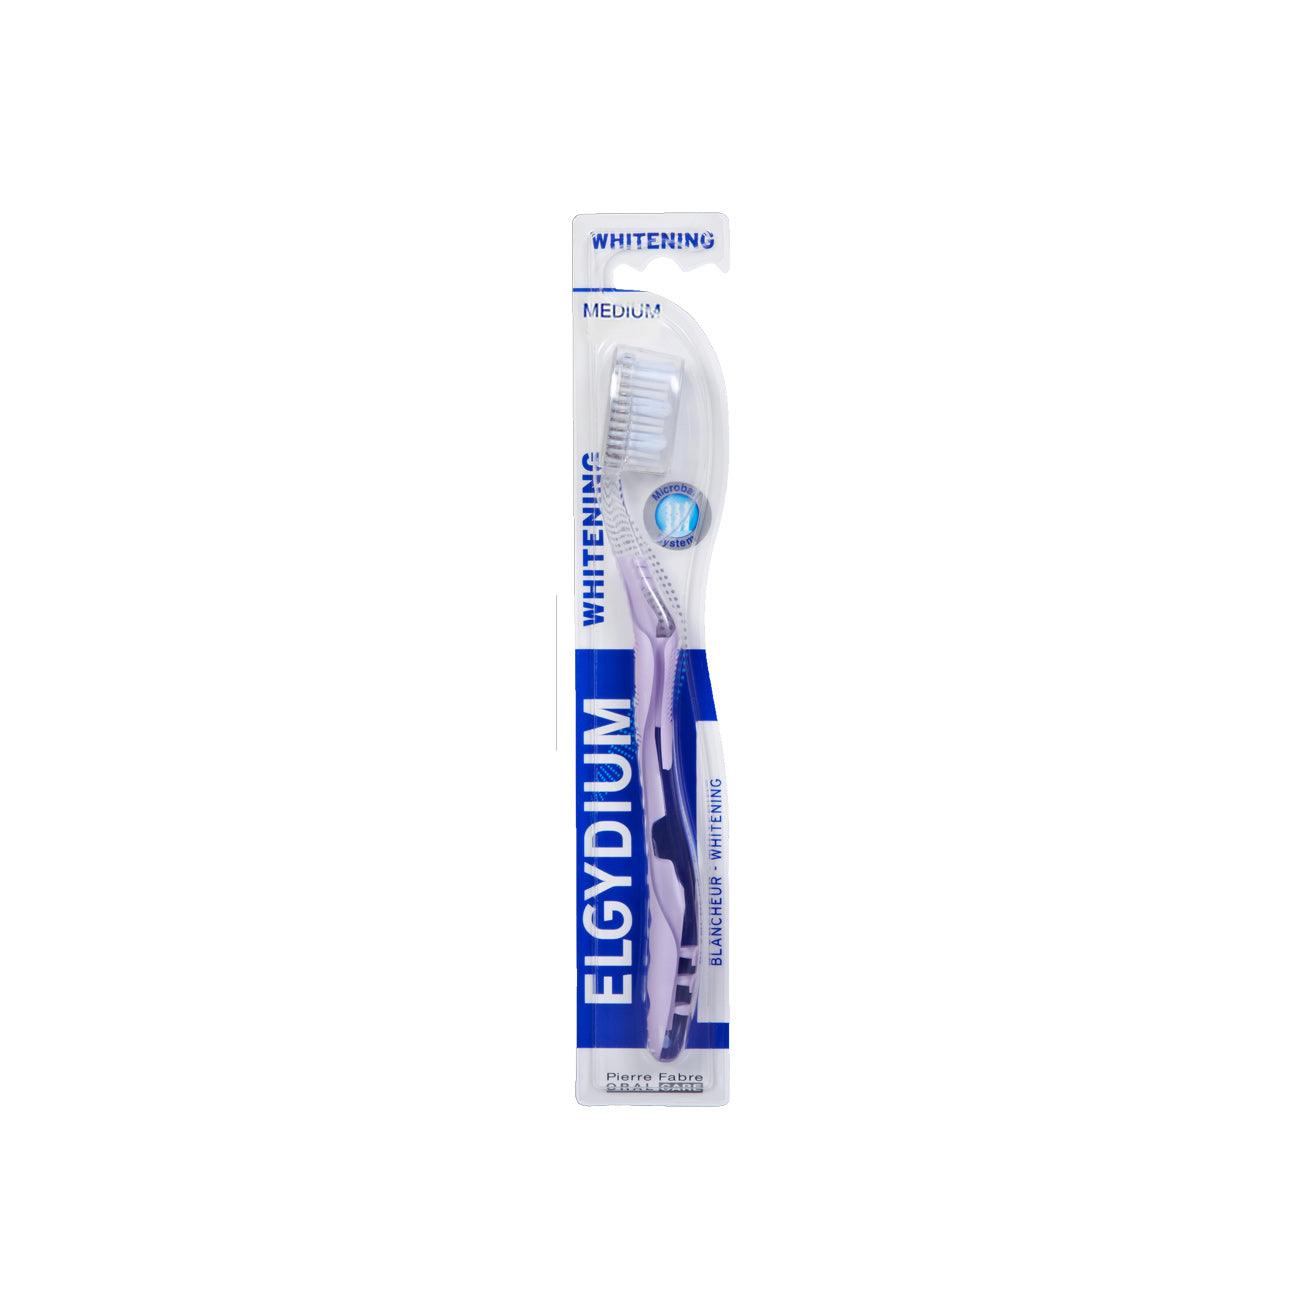 Elgydium
Whitening Toothbrush - Medium